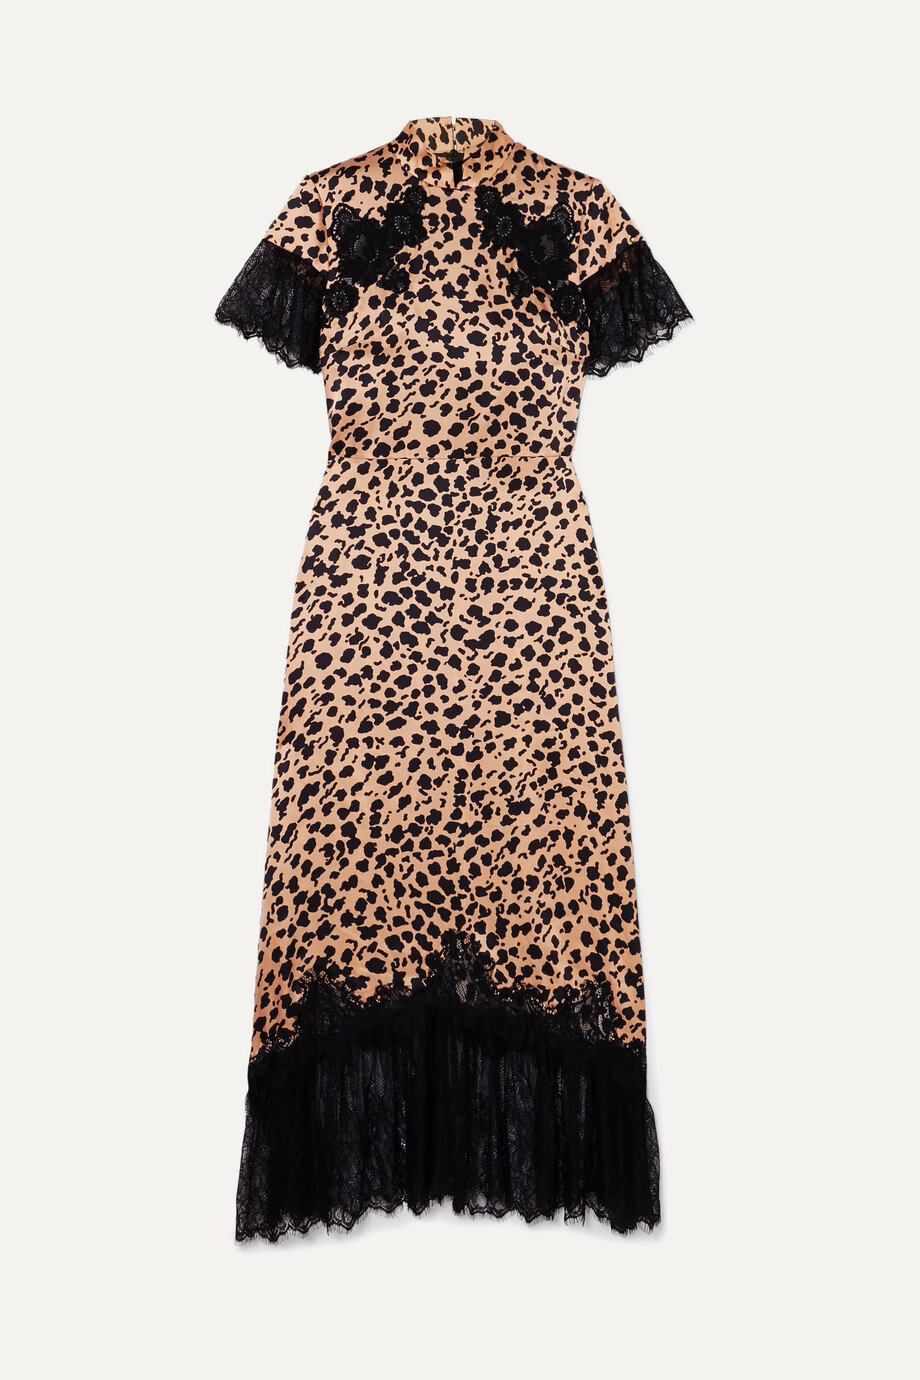 Saloni Venyx Ryder Lace-Trimmed Leopard-Print Midi Dress.jpg